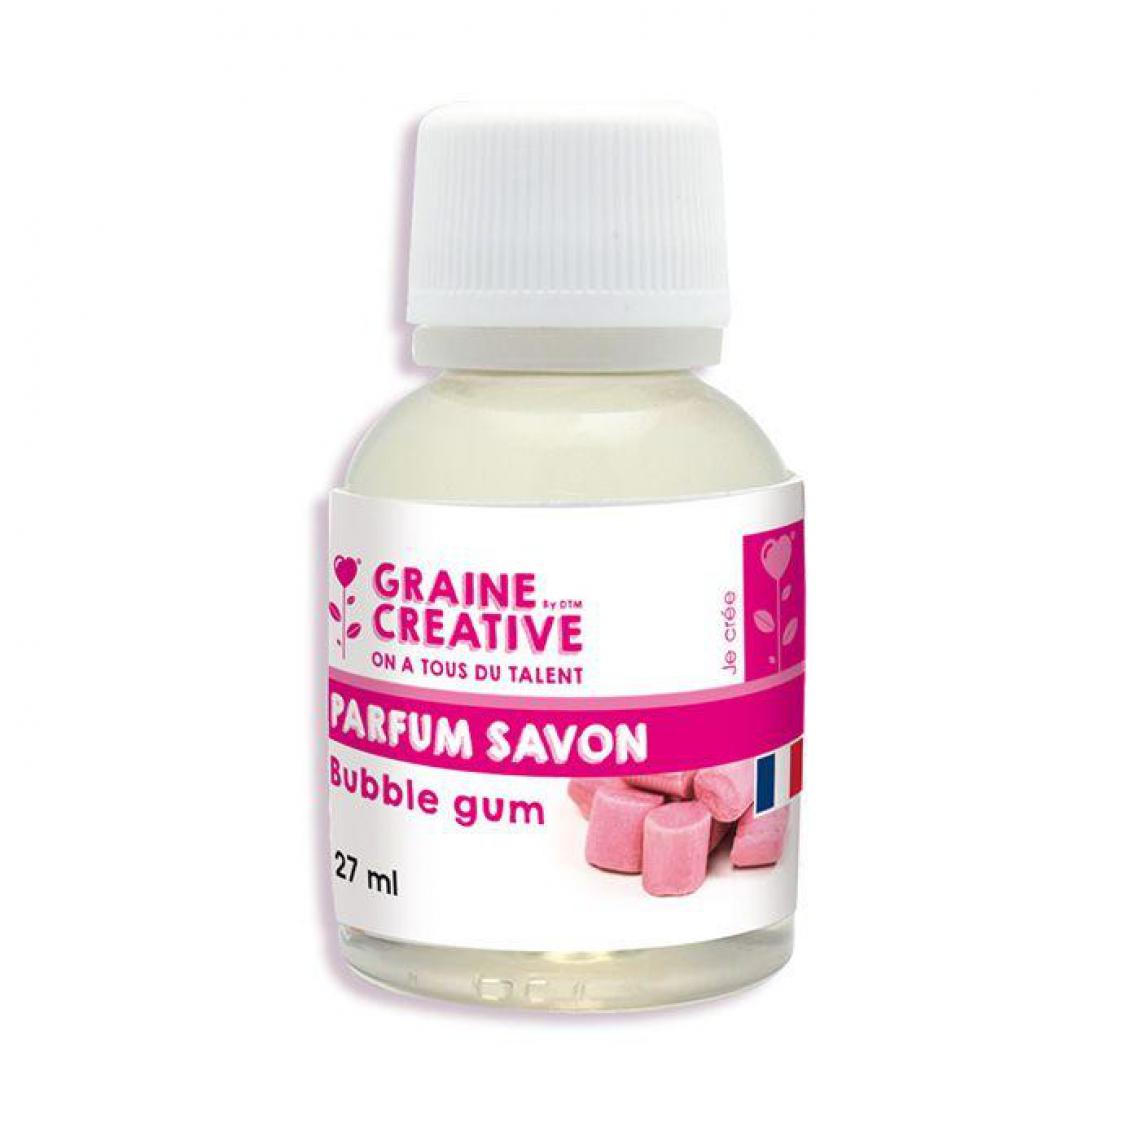 Graines Creatives - Parfum pour savon 27 ml - Chewing-gum - Dessin et peinture